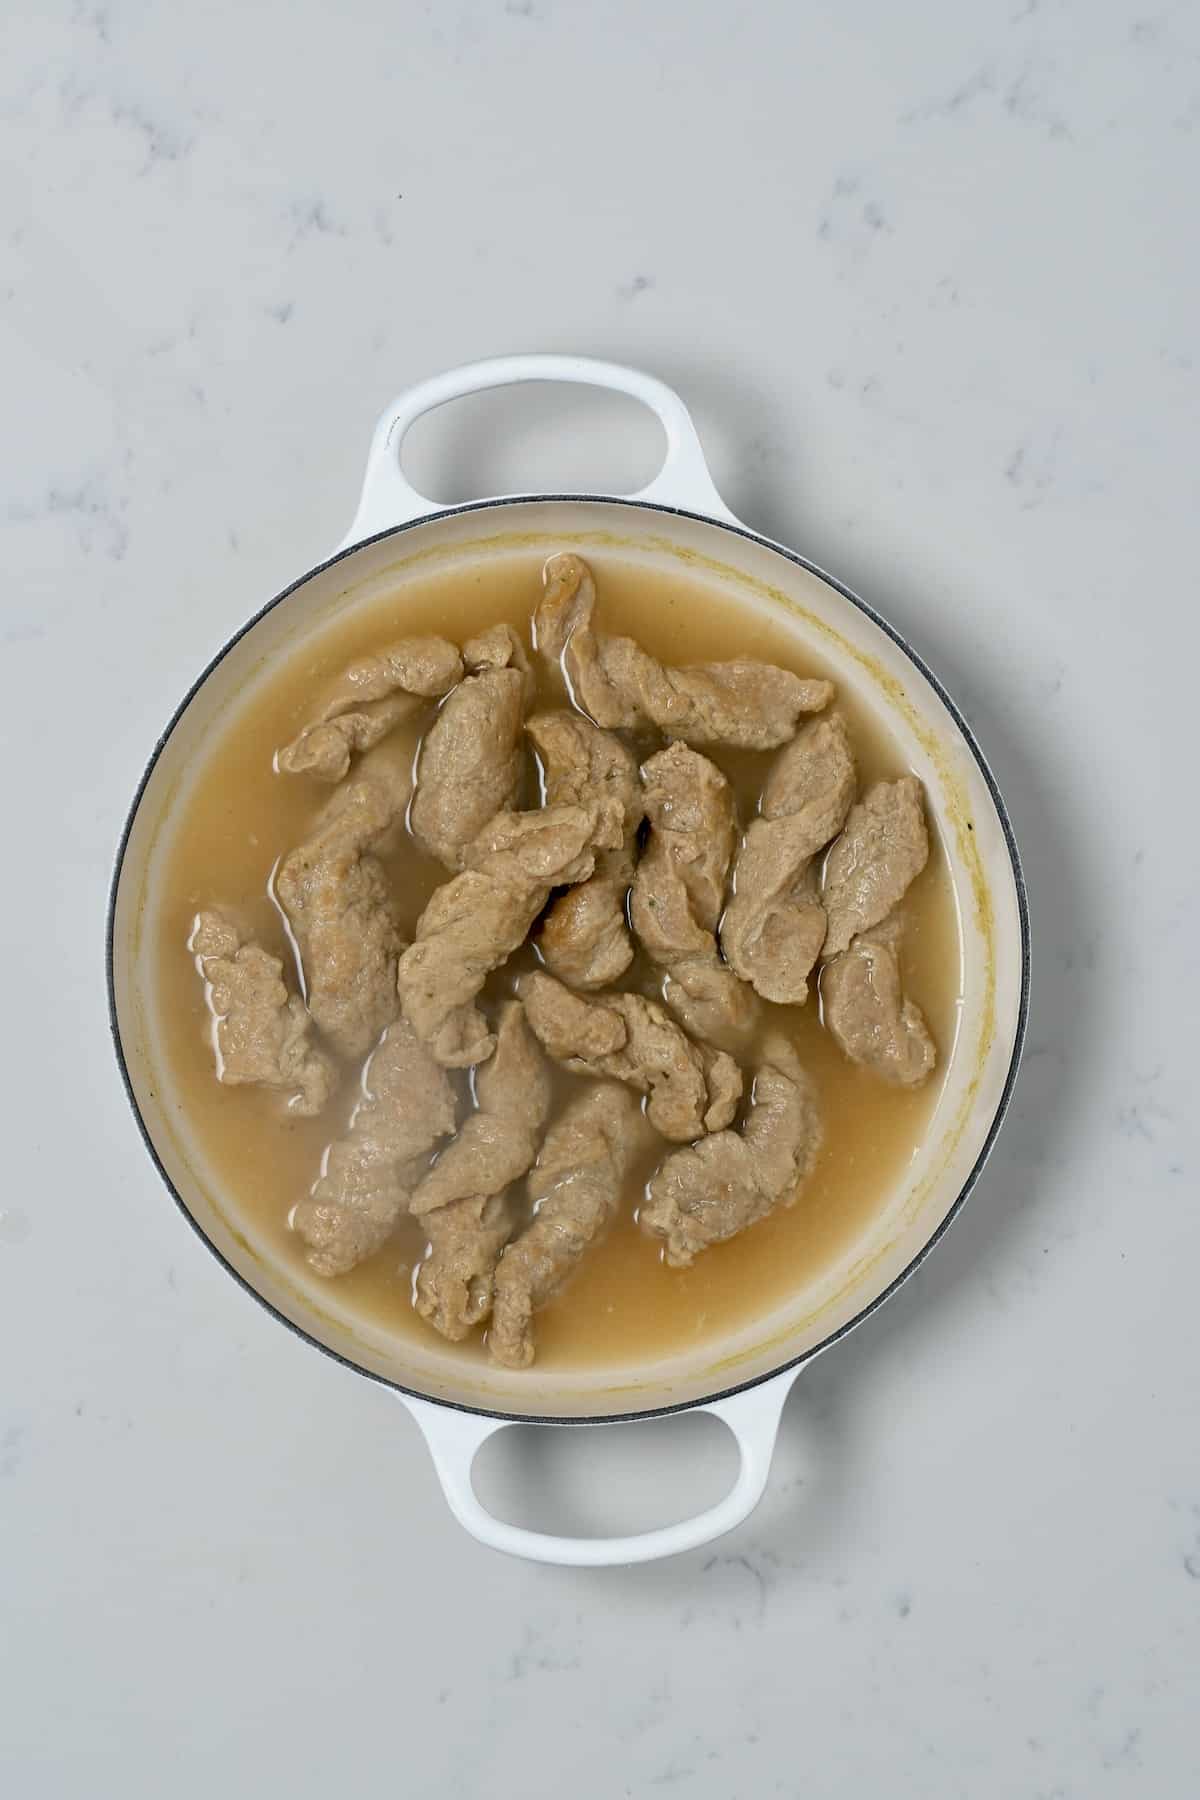 Boiled seitan in a pan